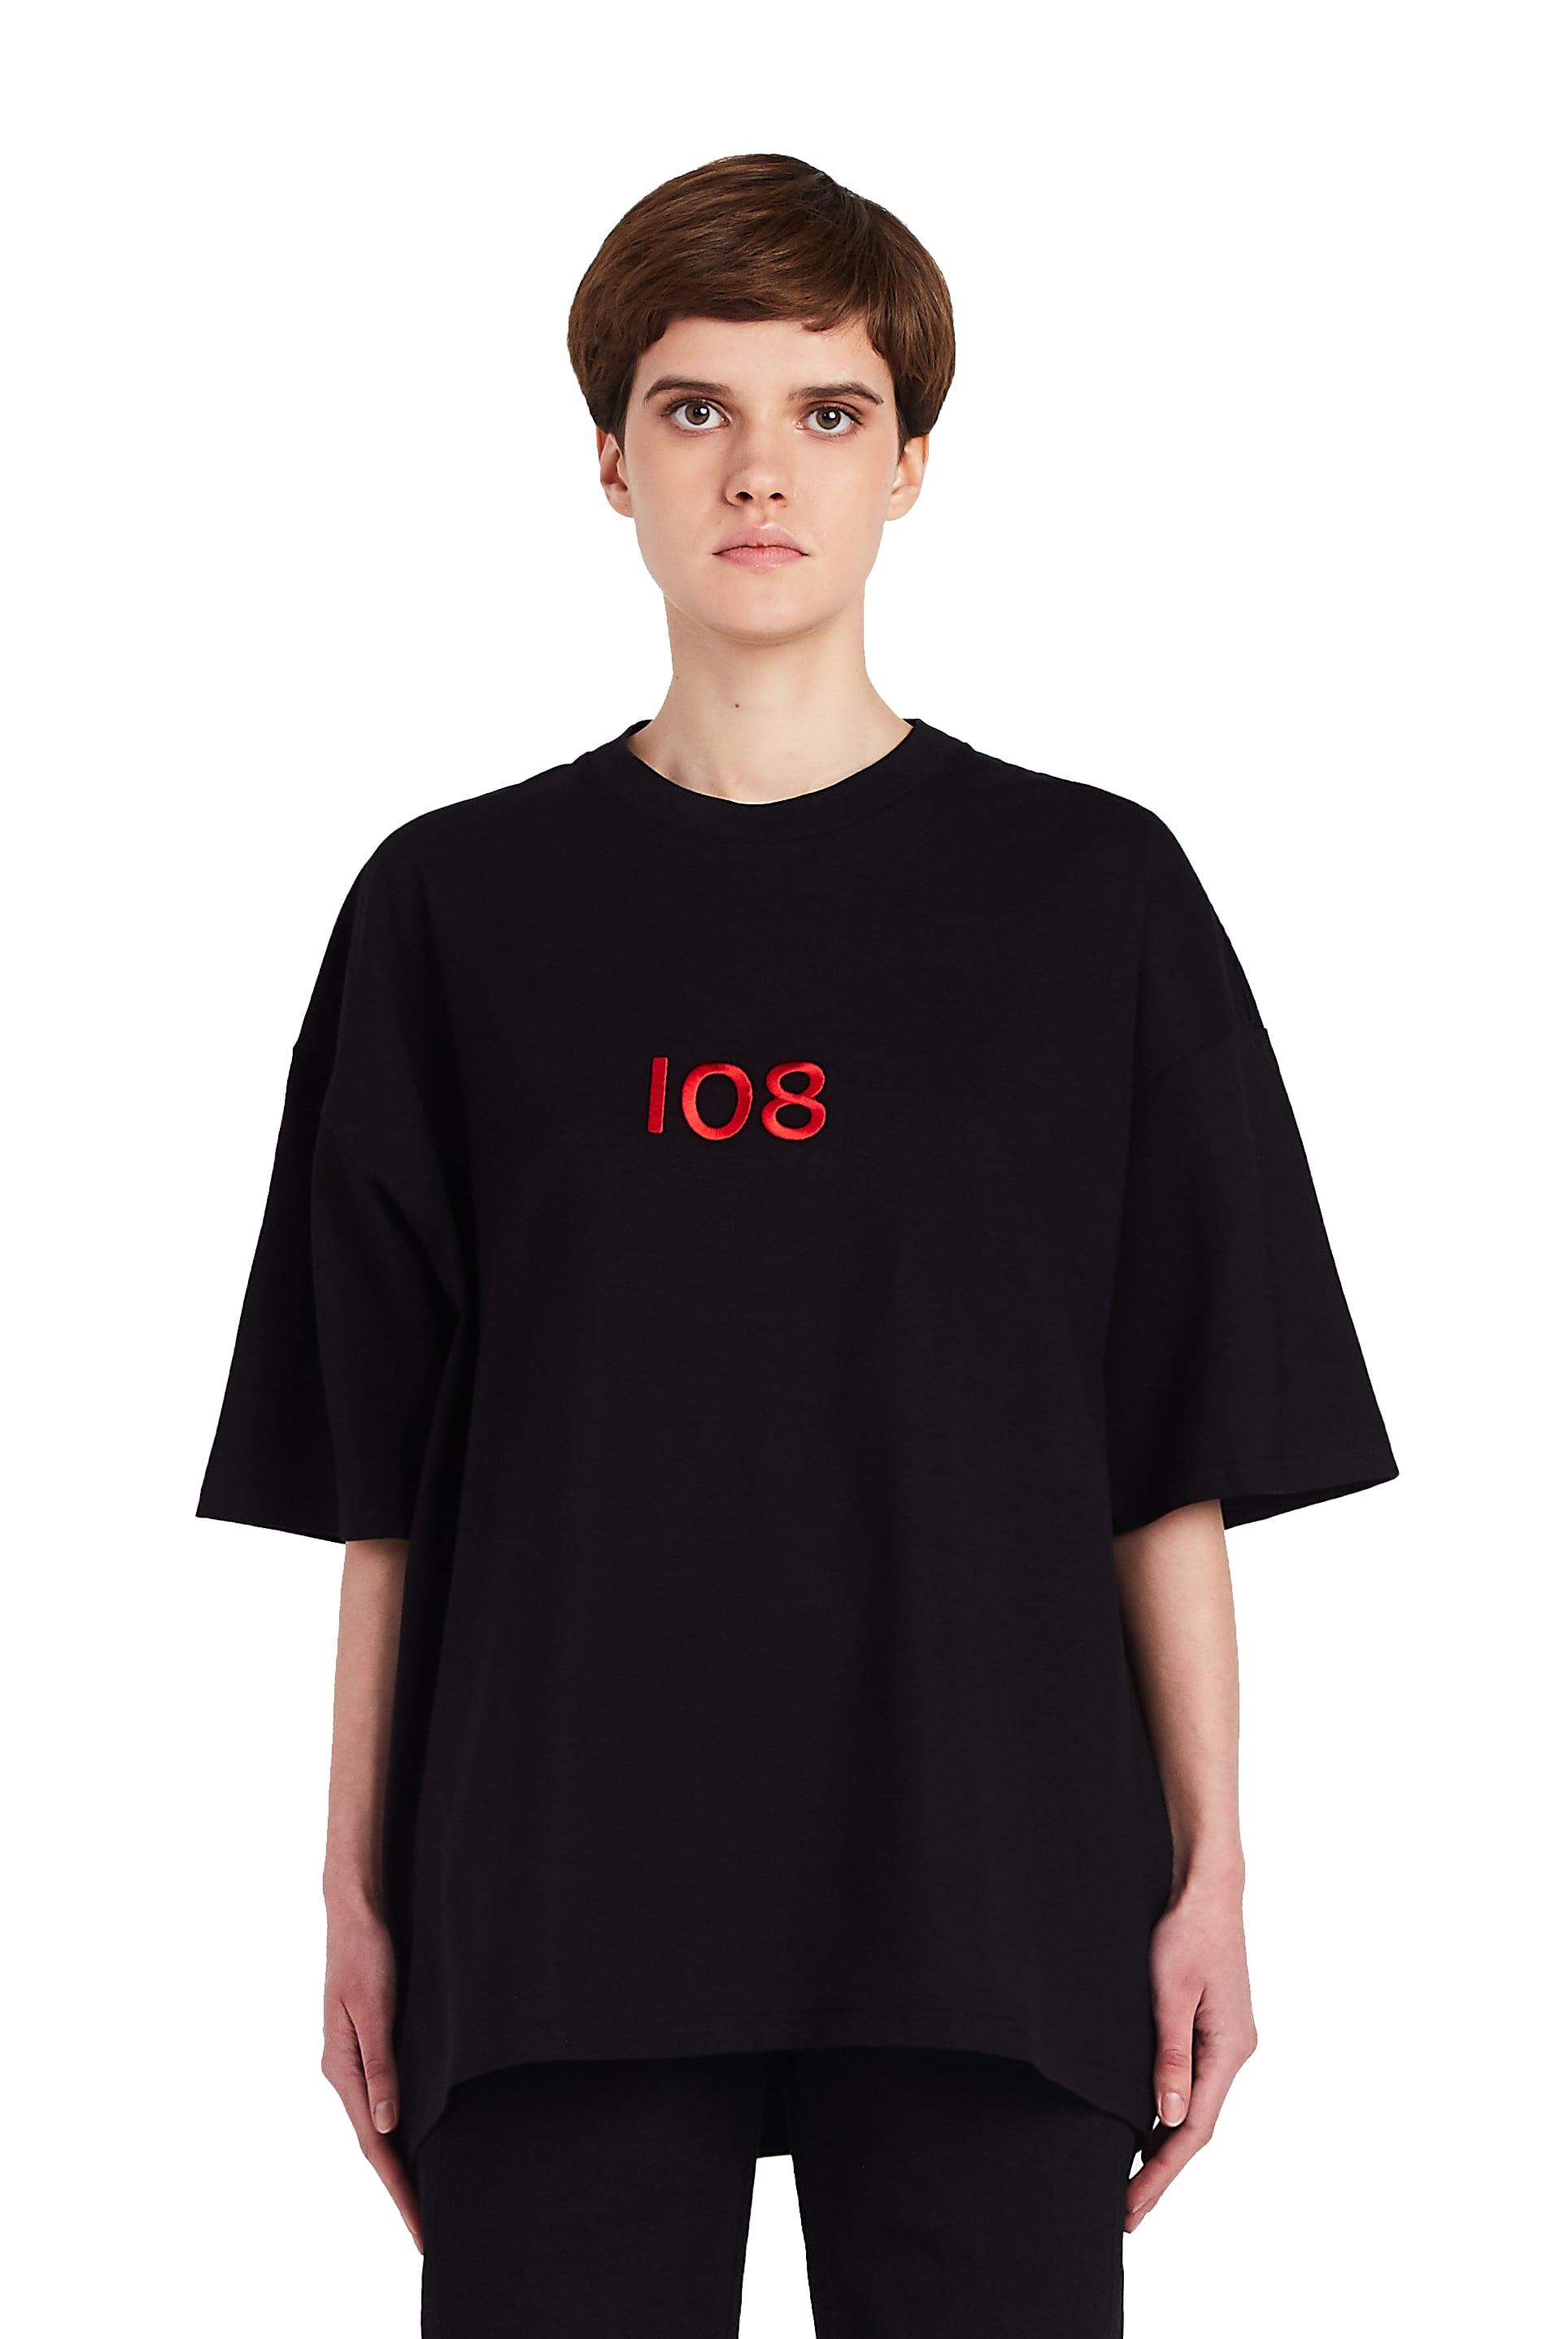 Black t-shirt SYSTEM 108